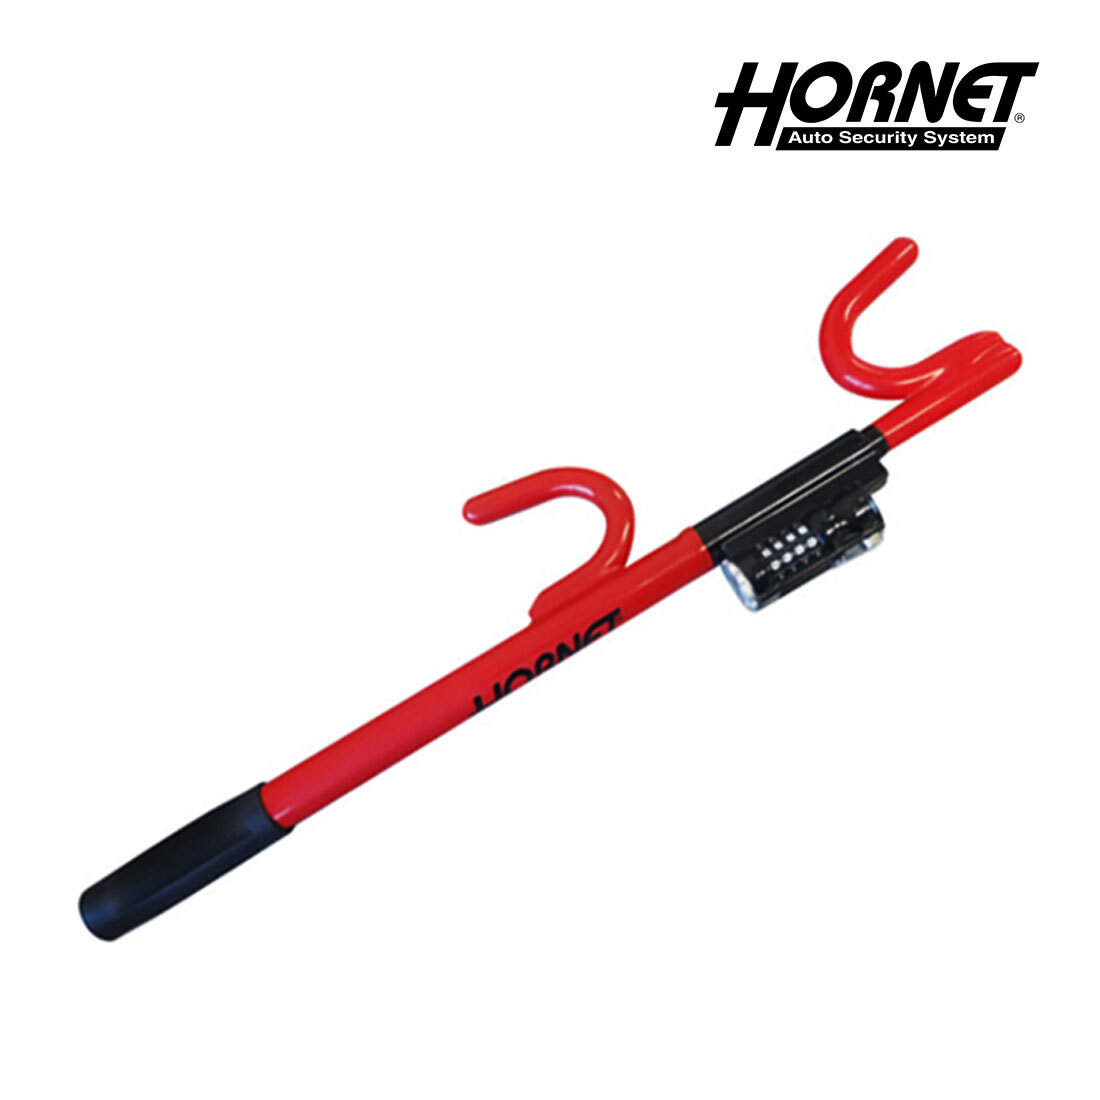 HORNET Hornet steering wheel lock steering gear lock LH-11R dial key red automobile theft countermeasure anti-theft 